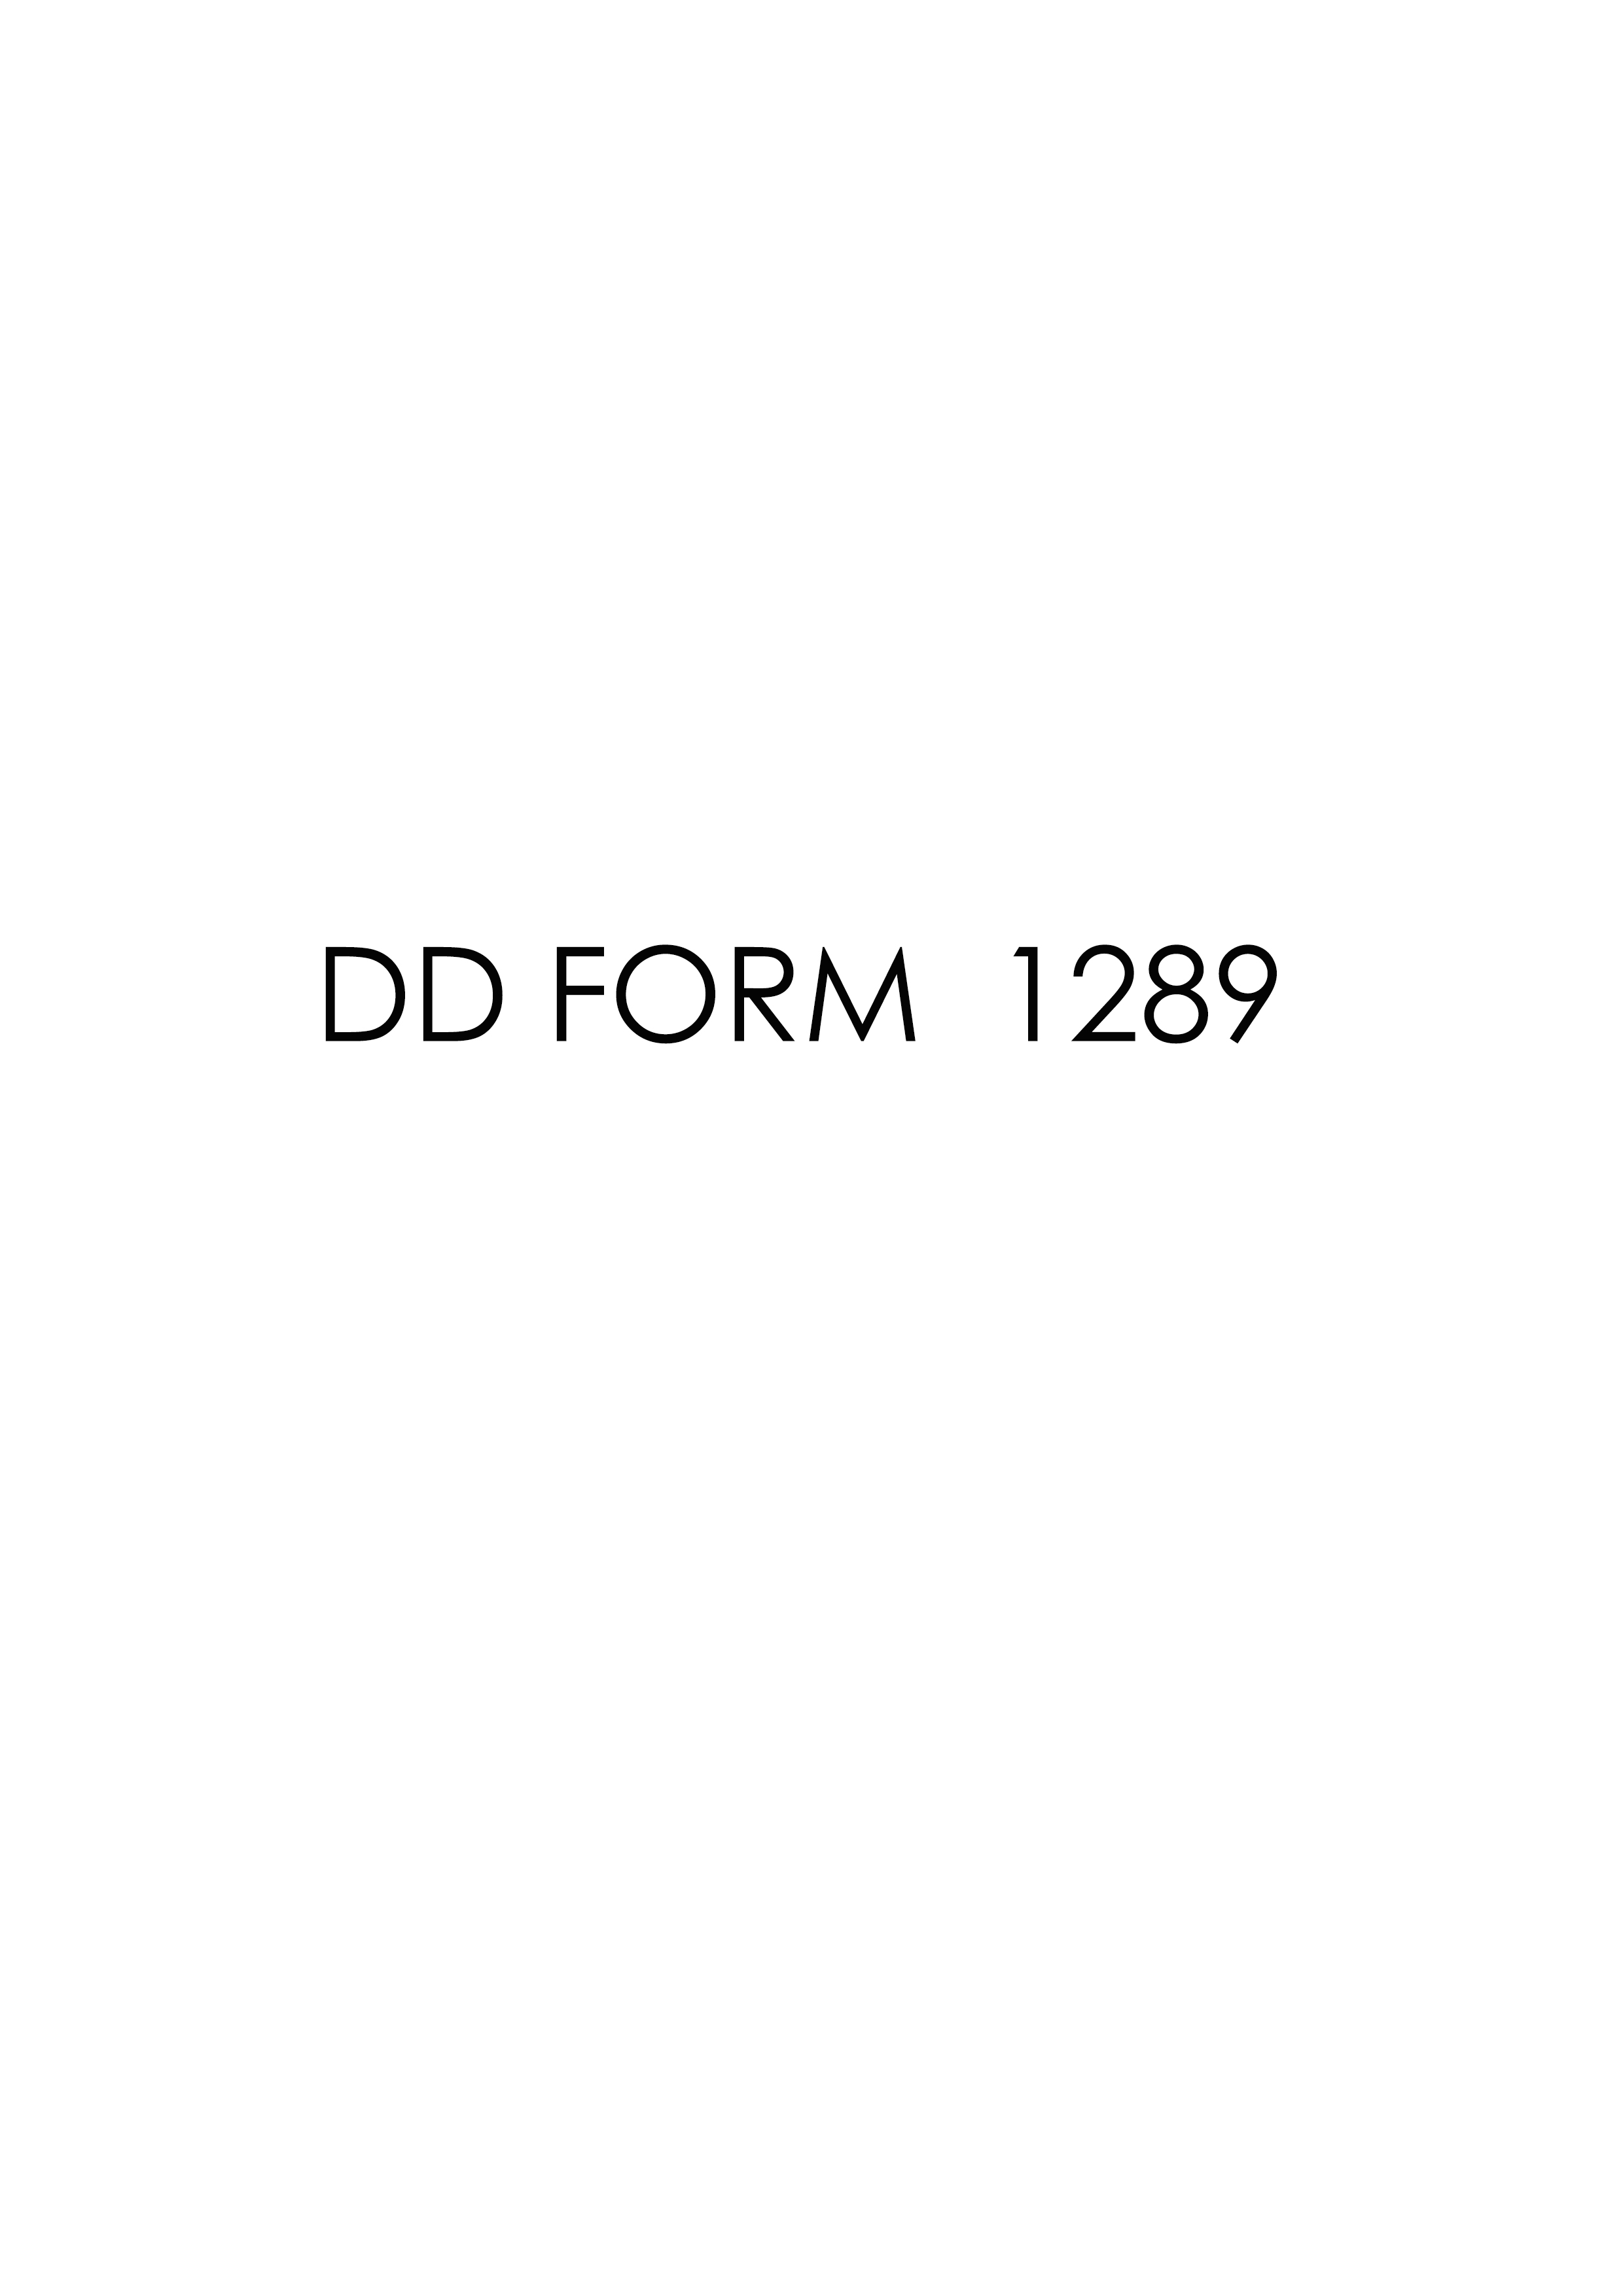 Download dd Form 1289